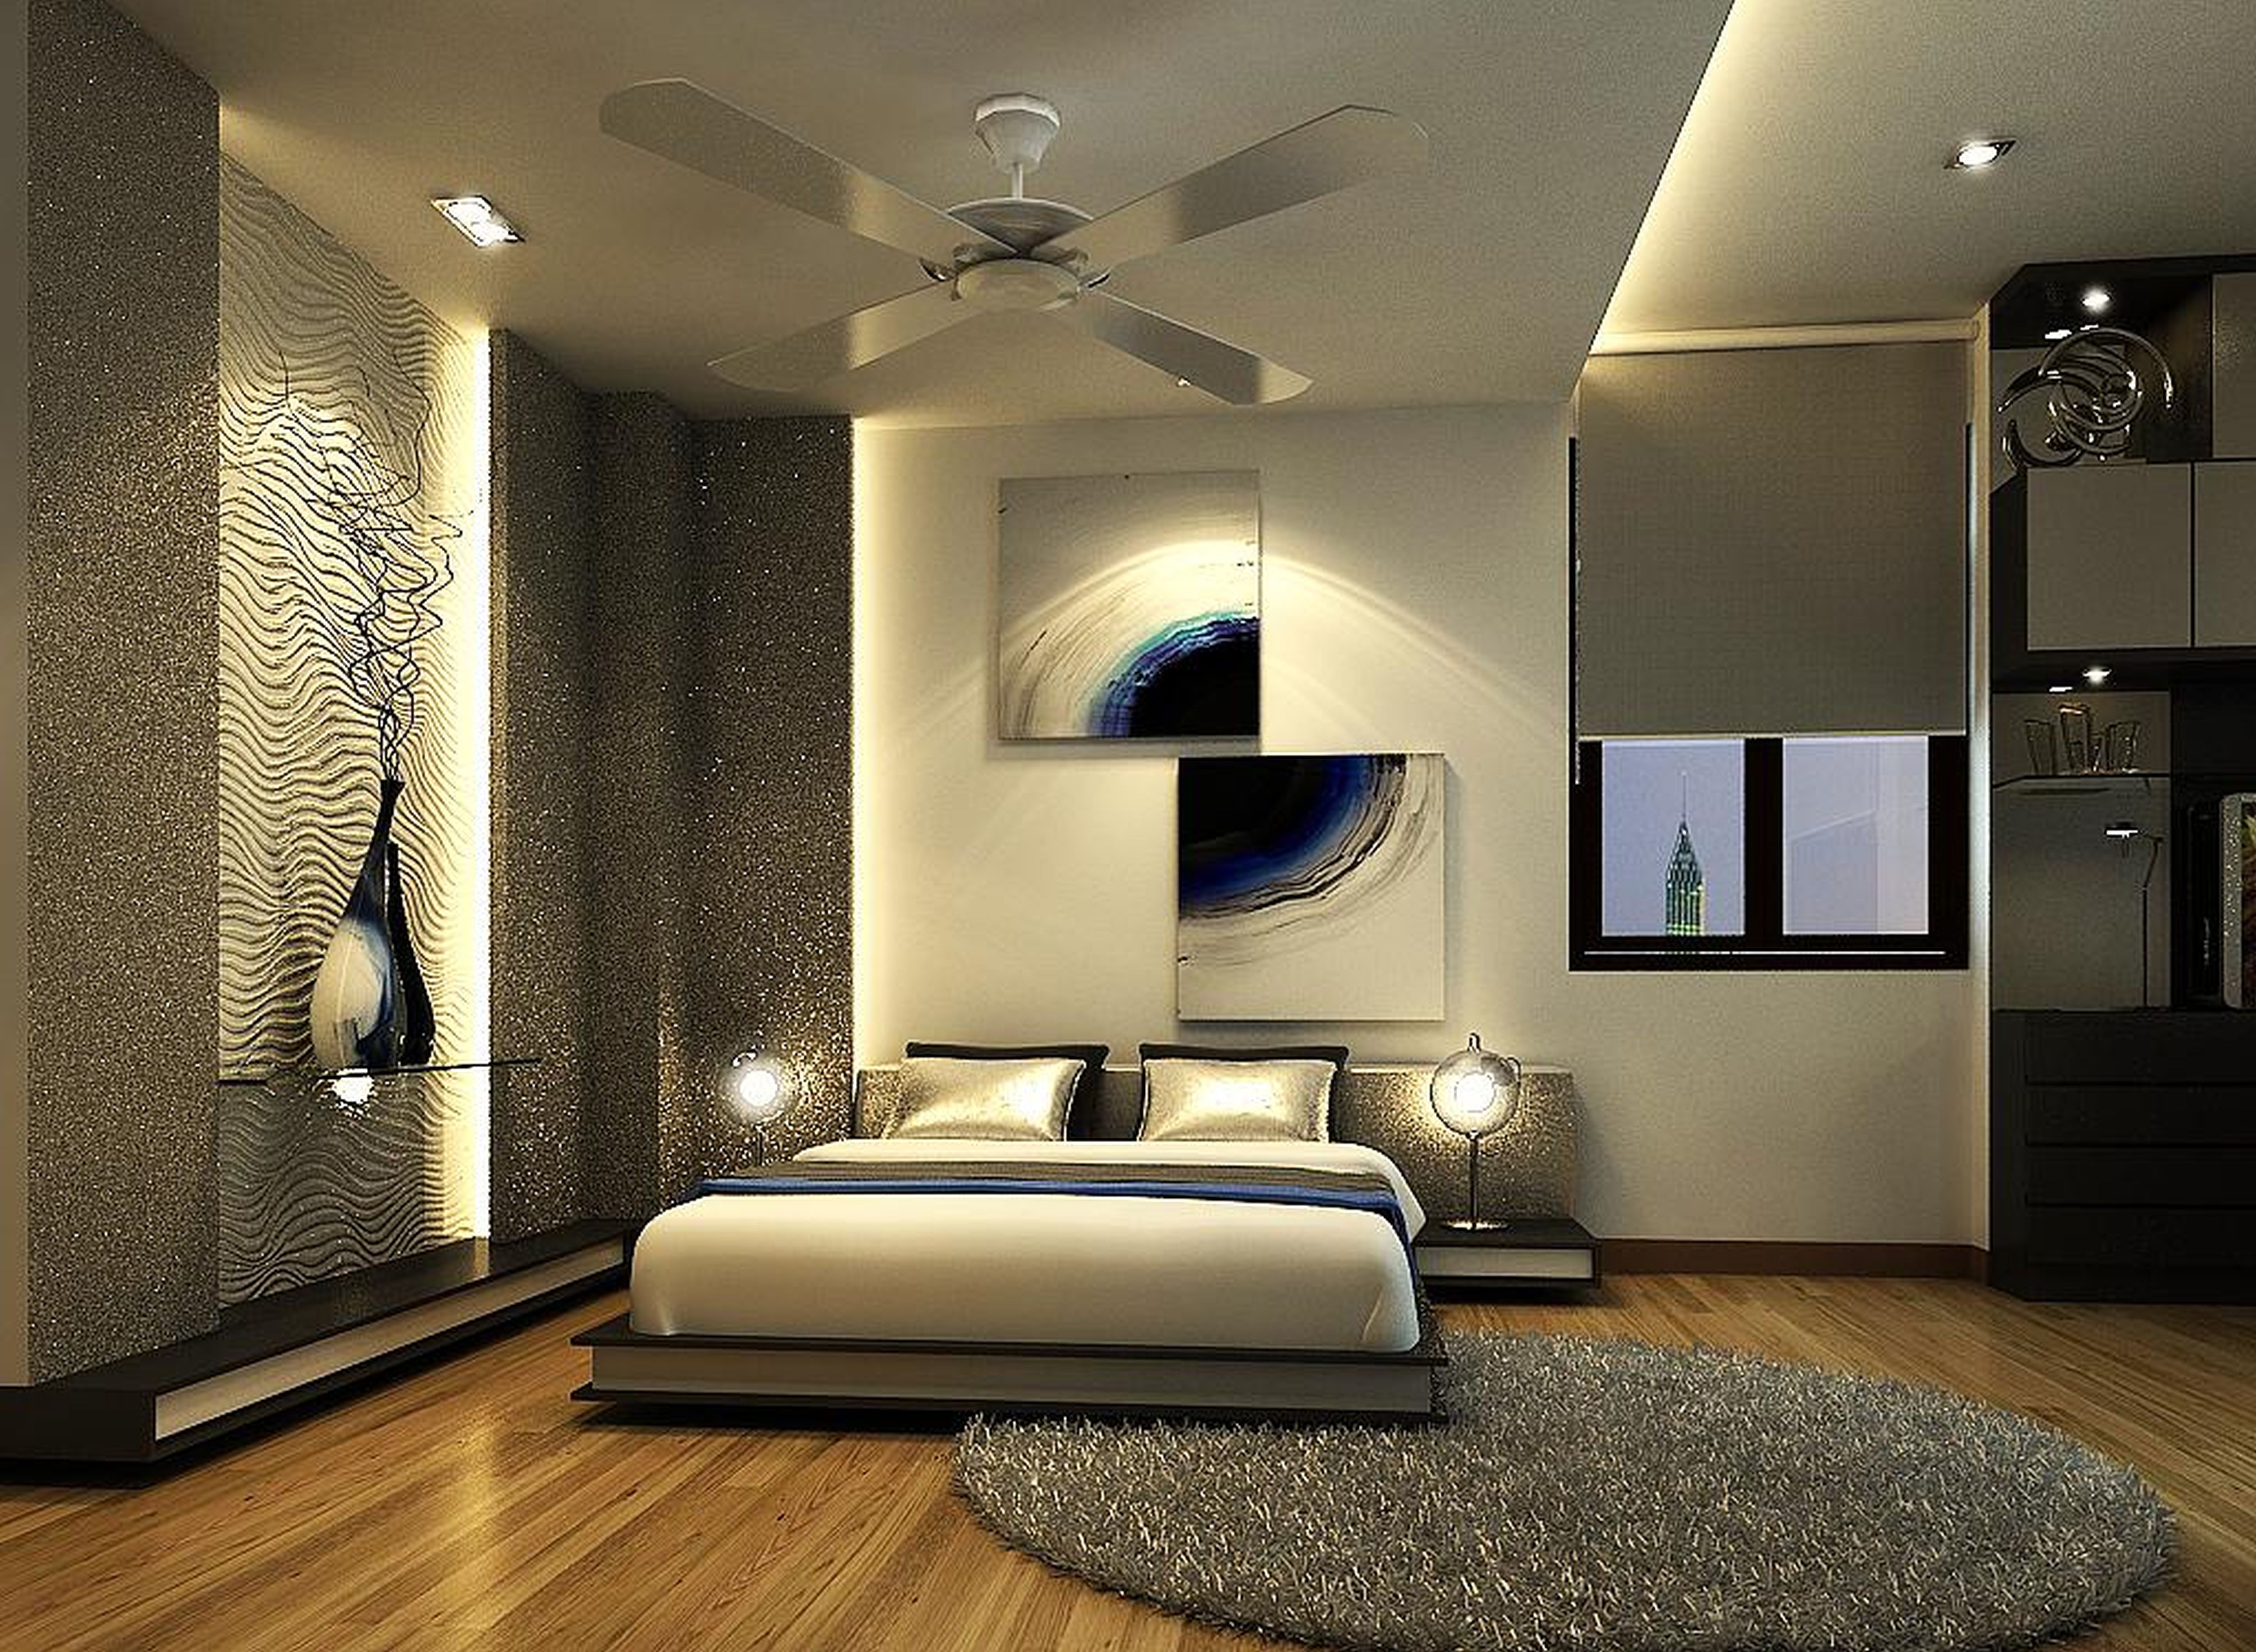 Bedroom Light Decor: Illuminating The Room With Style